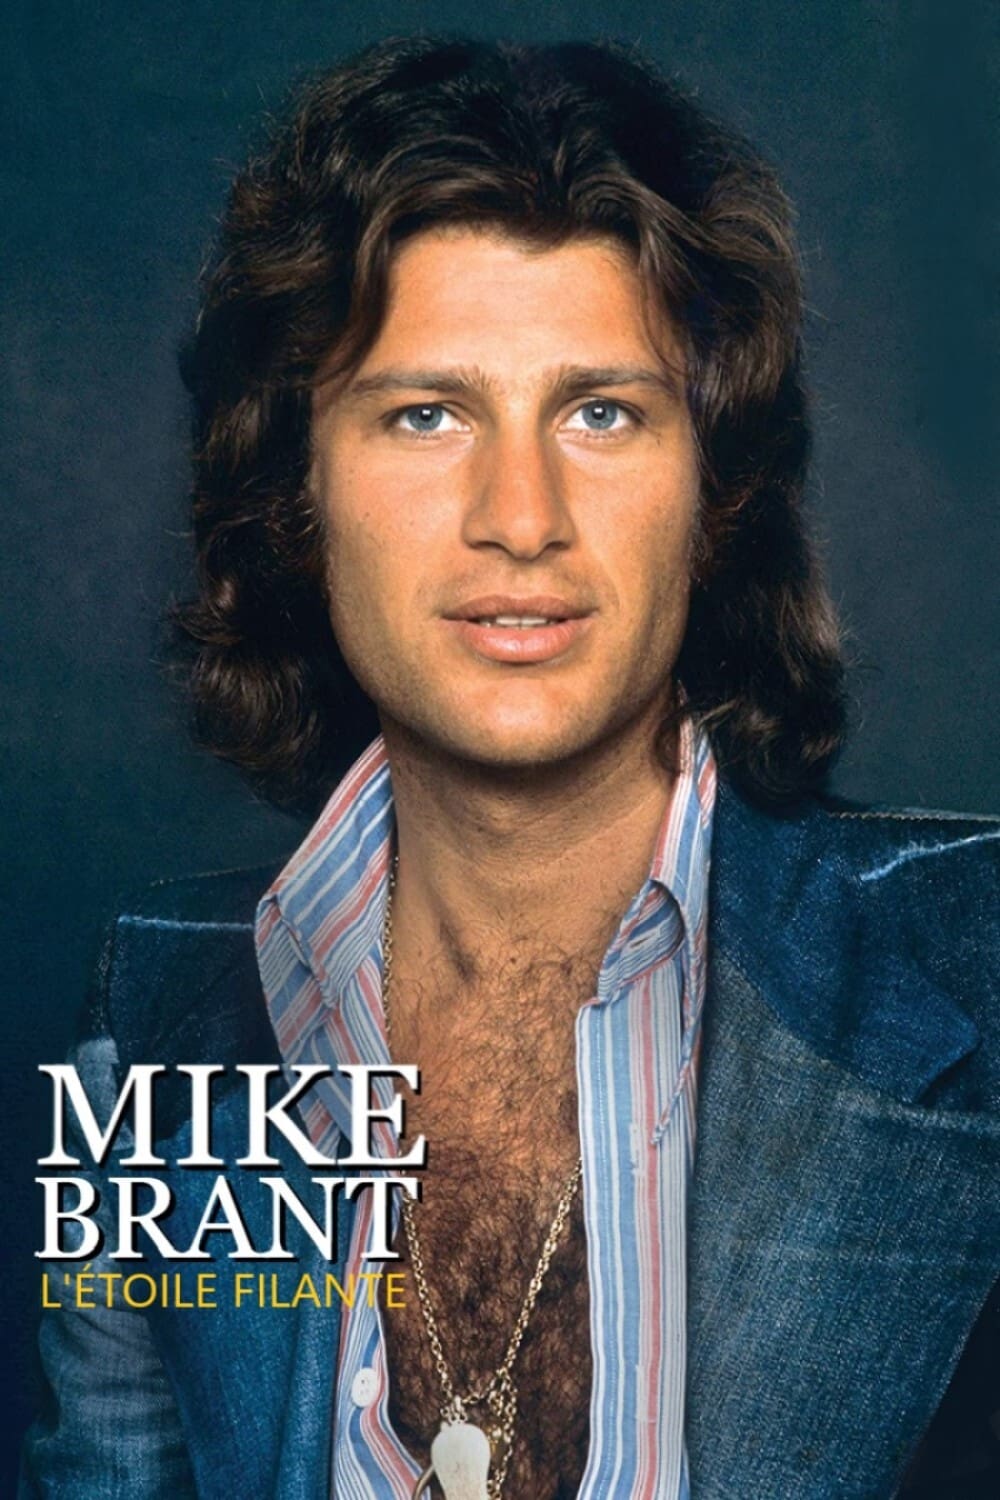 Mike Brant, l'étoile filante